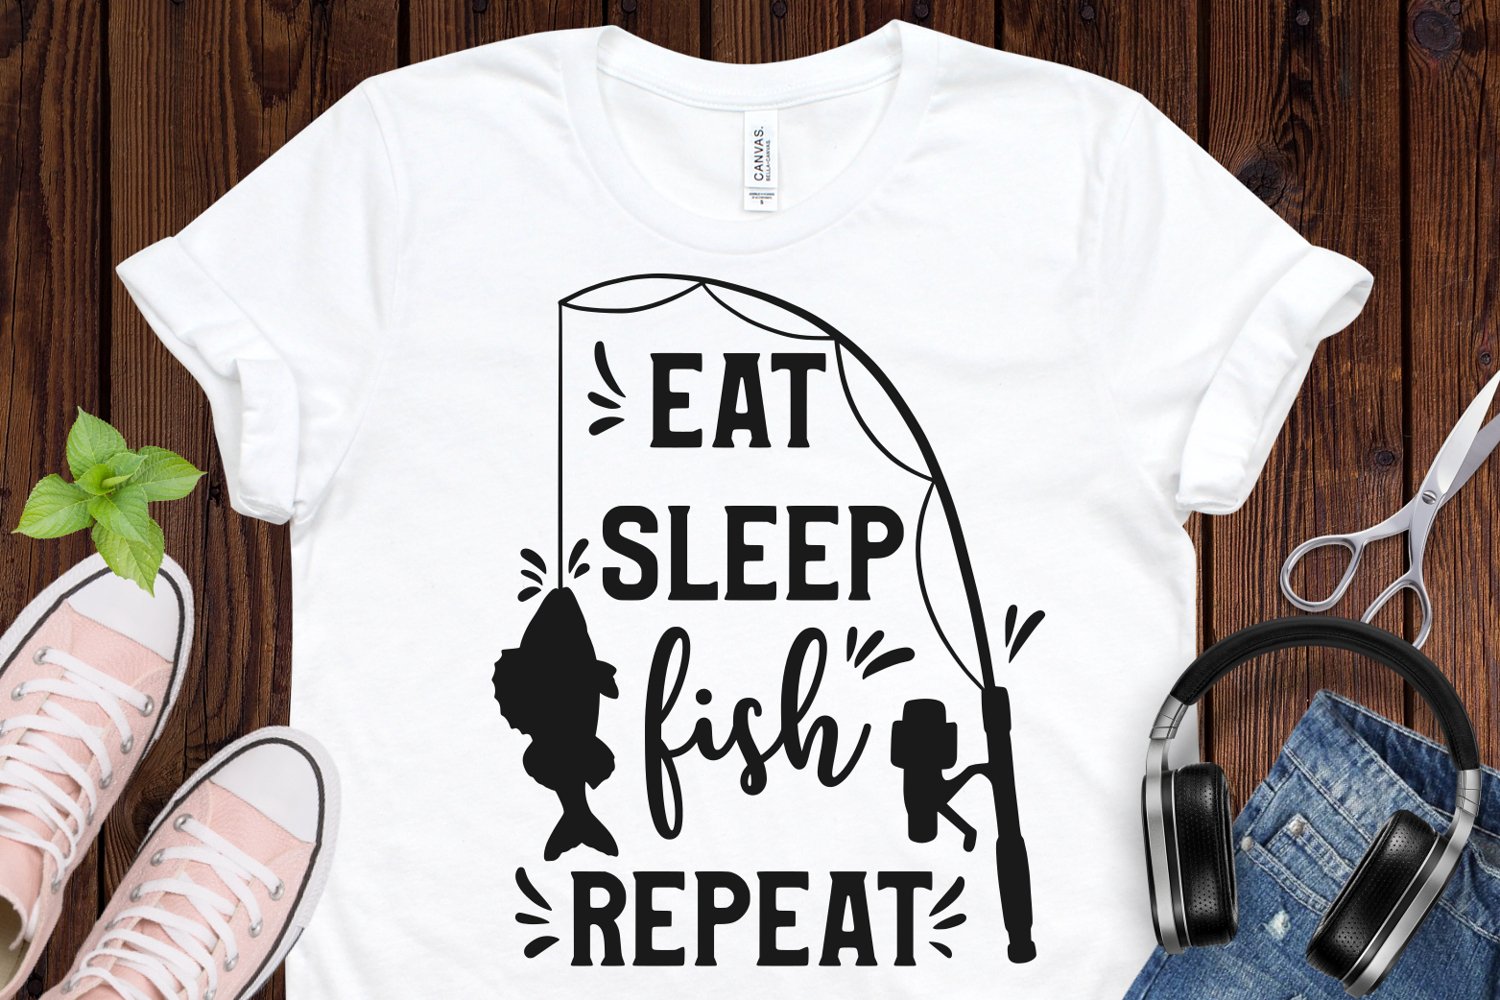 Eat, sleep & fish repeat.